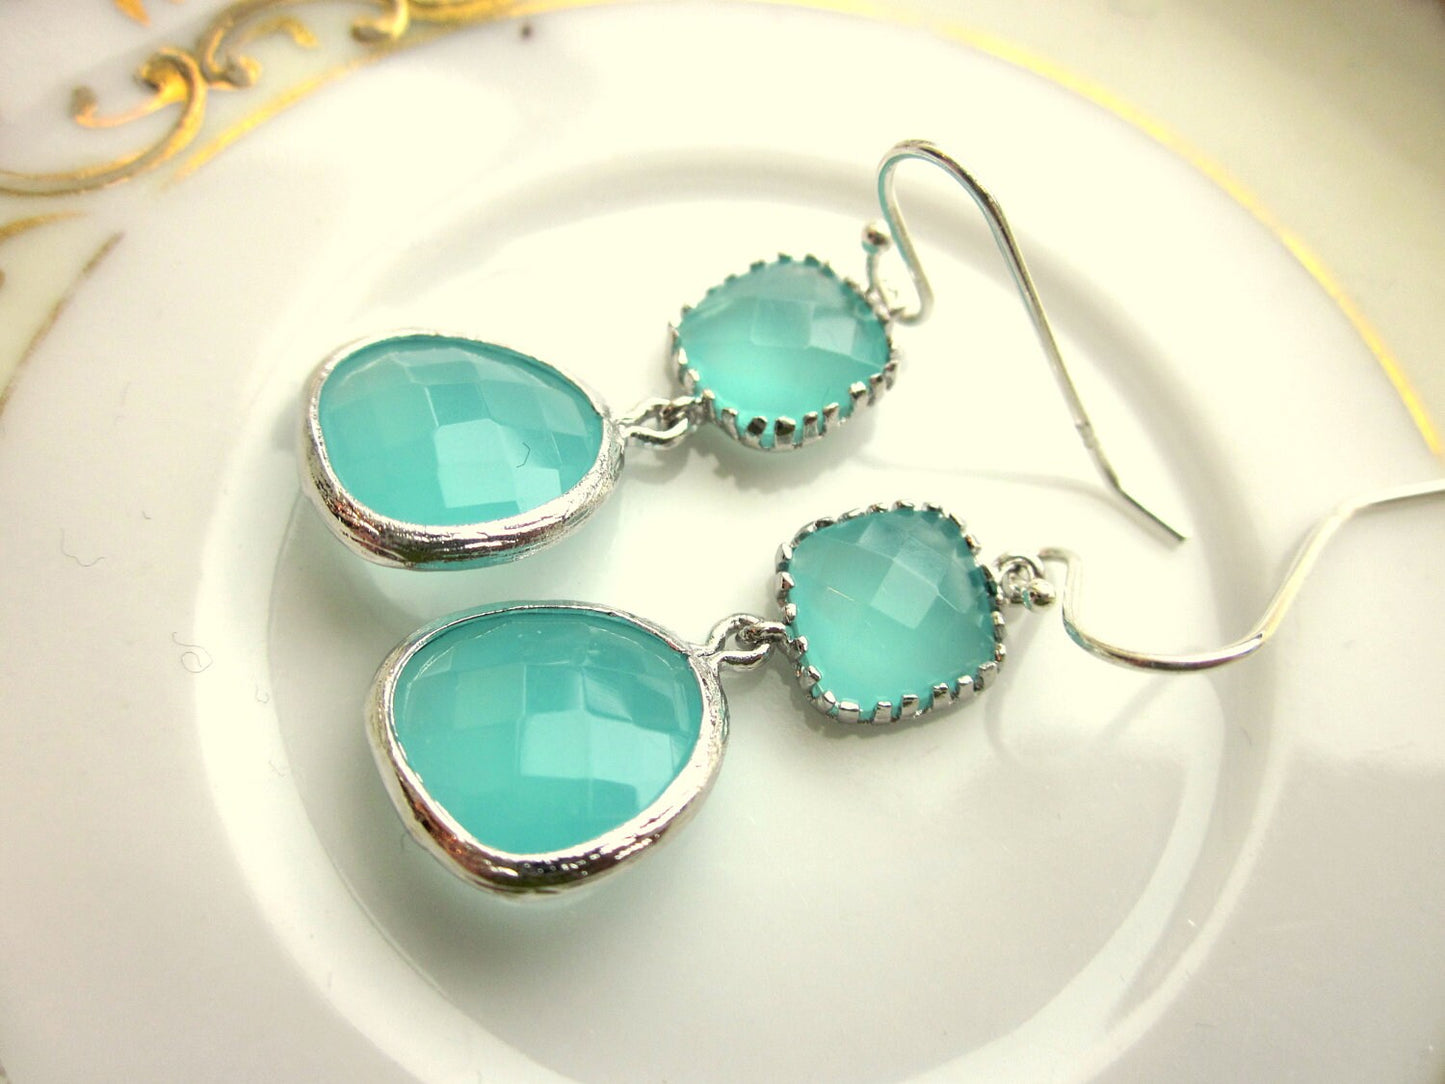 Aqua Mint Blue Earrings Silver - Sterling Silver Earwires - Bridesmaid Earrings Wedding Earrings Bridesmaid Jewelry Wedding Jewelry